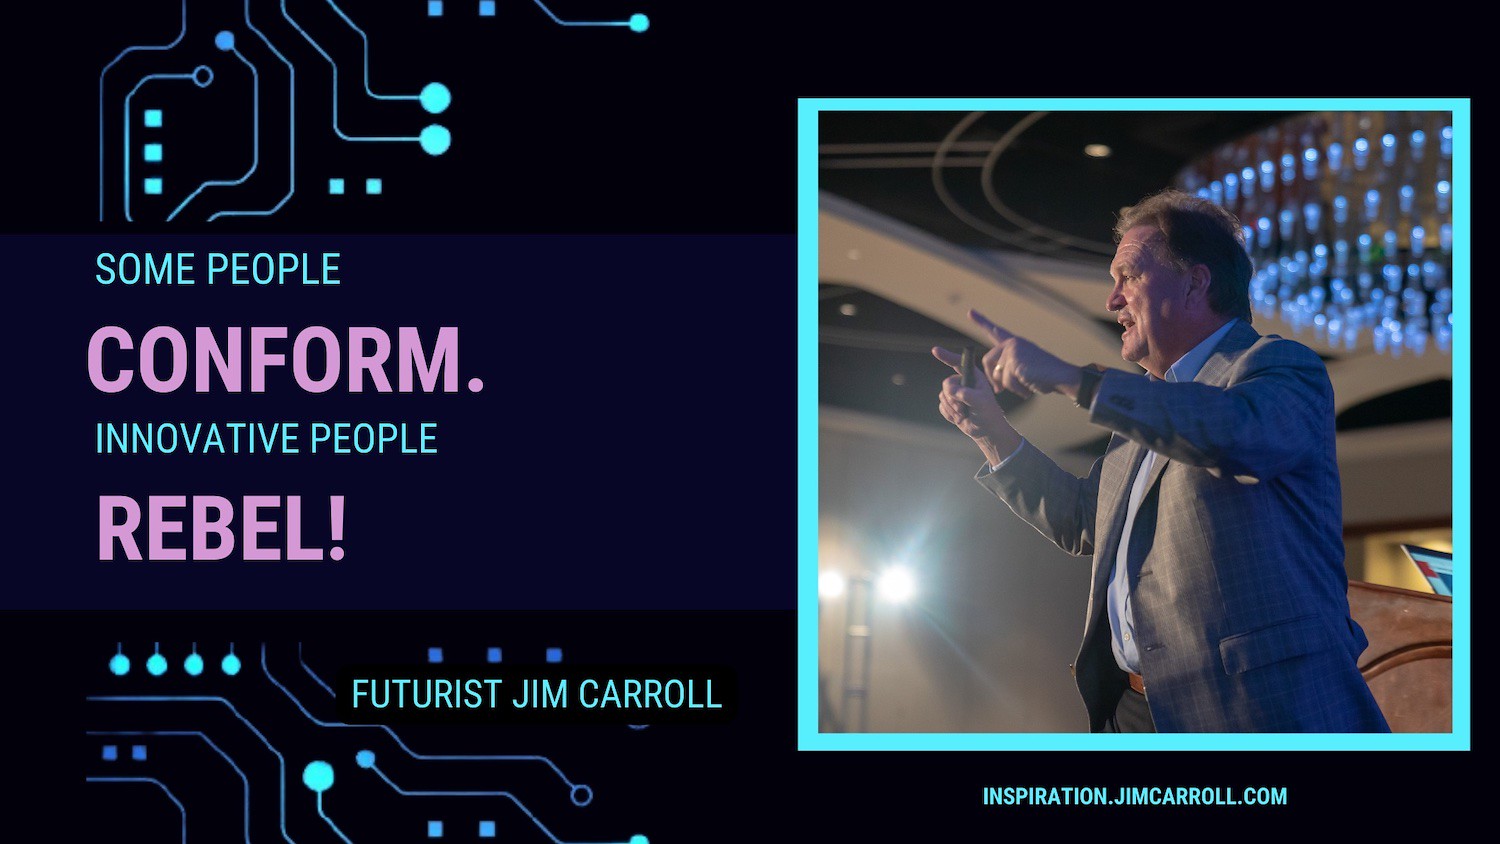 "Some people conform. Innovative people rebel!" - Futurist Jim Carroll